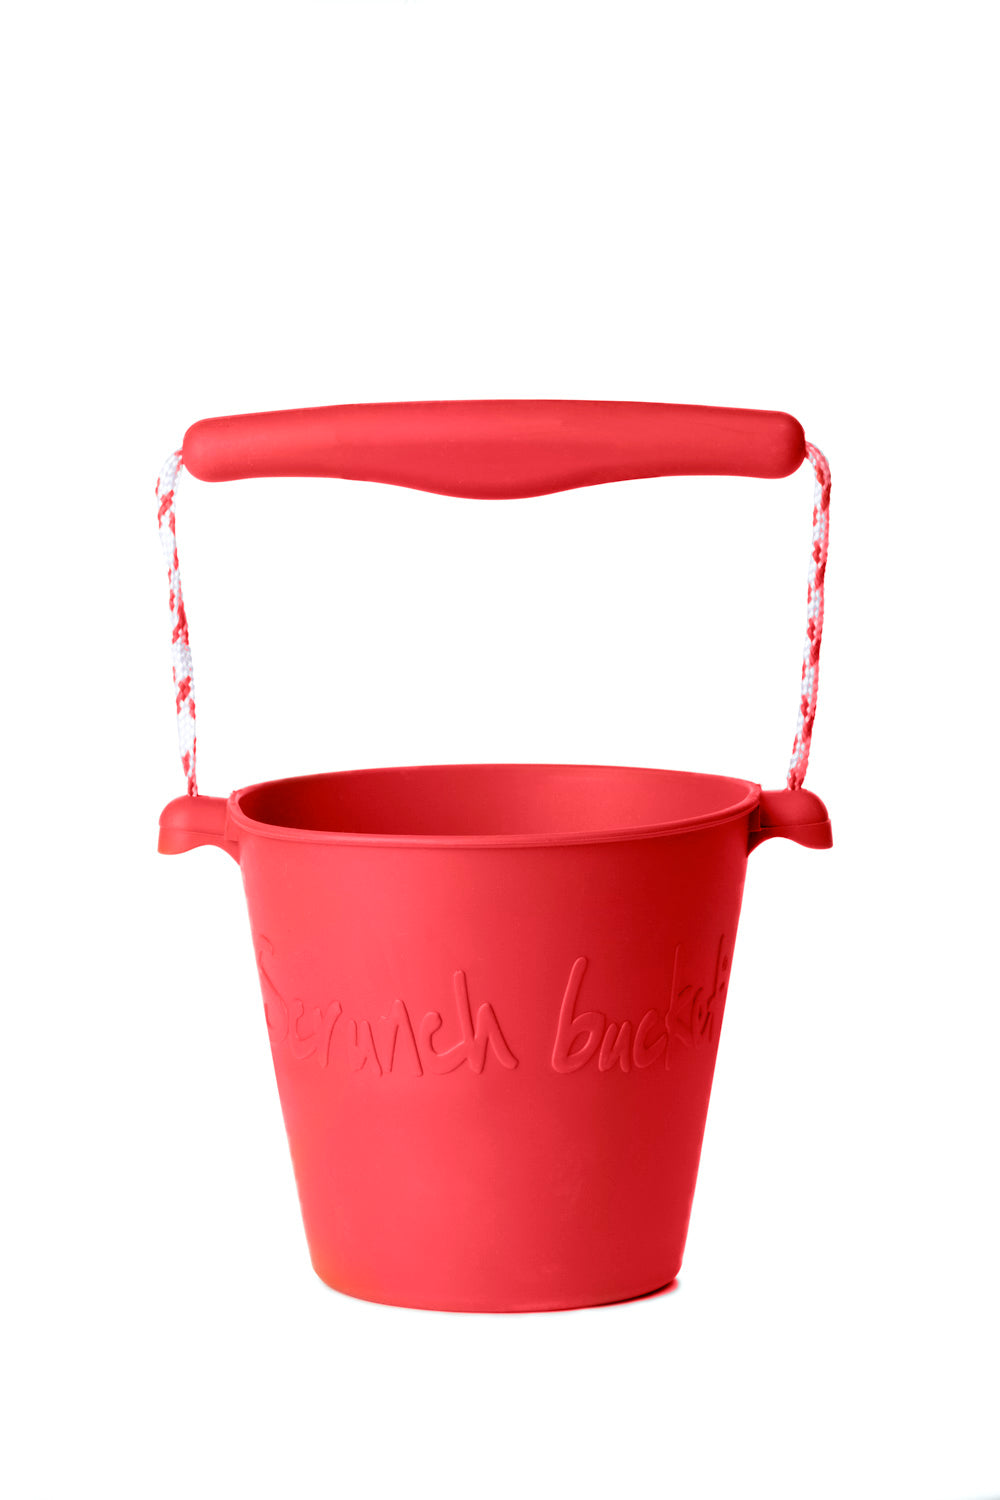 Scrunch Bucket - Strawberry Red